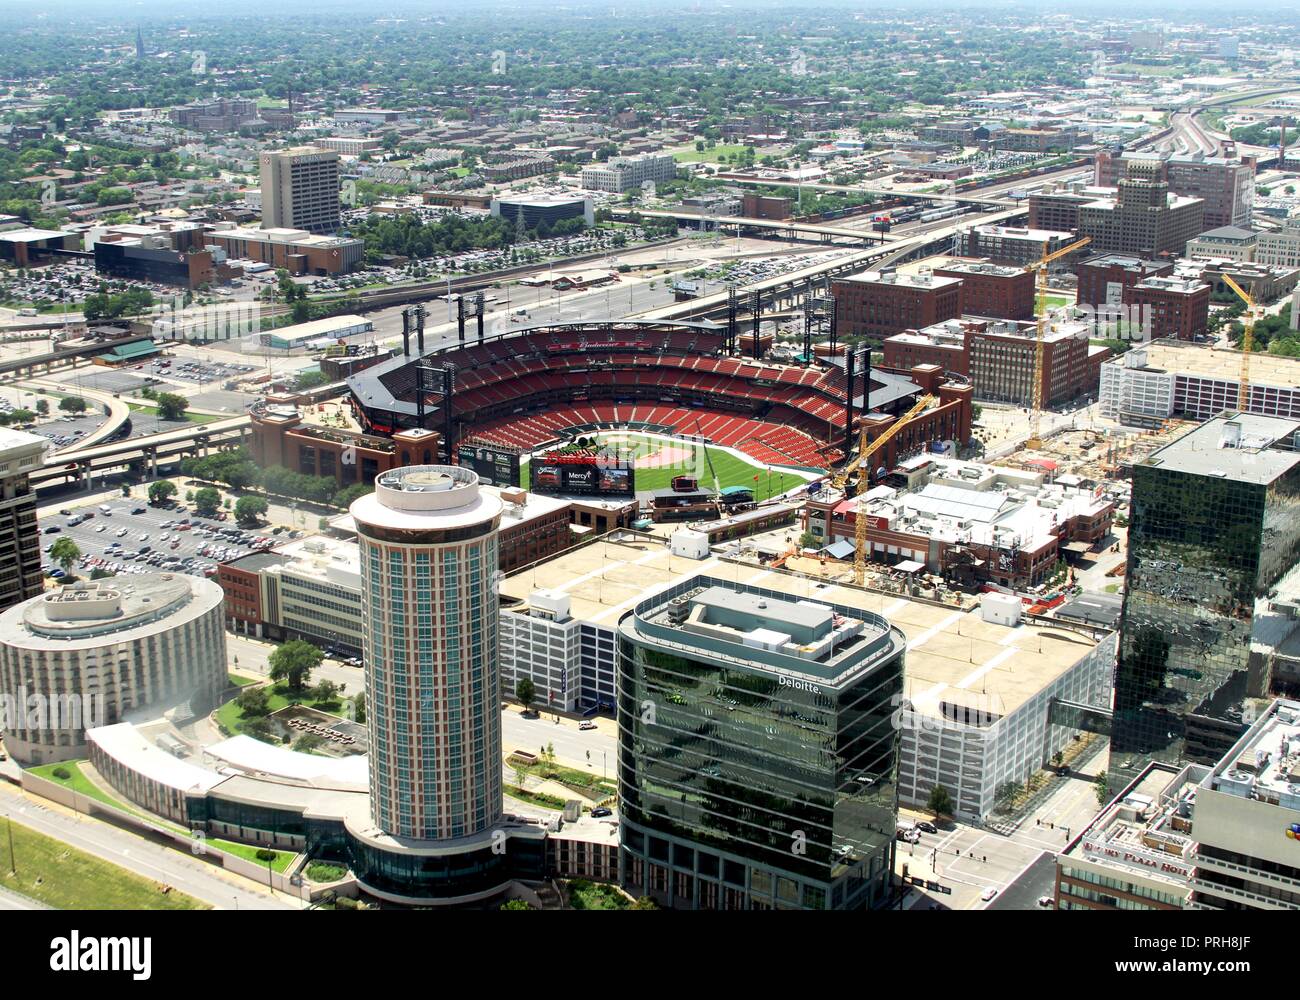 St. Louis stadium seen from above Stock Photo